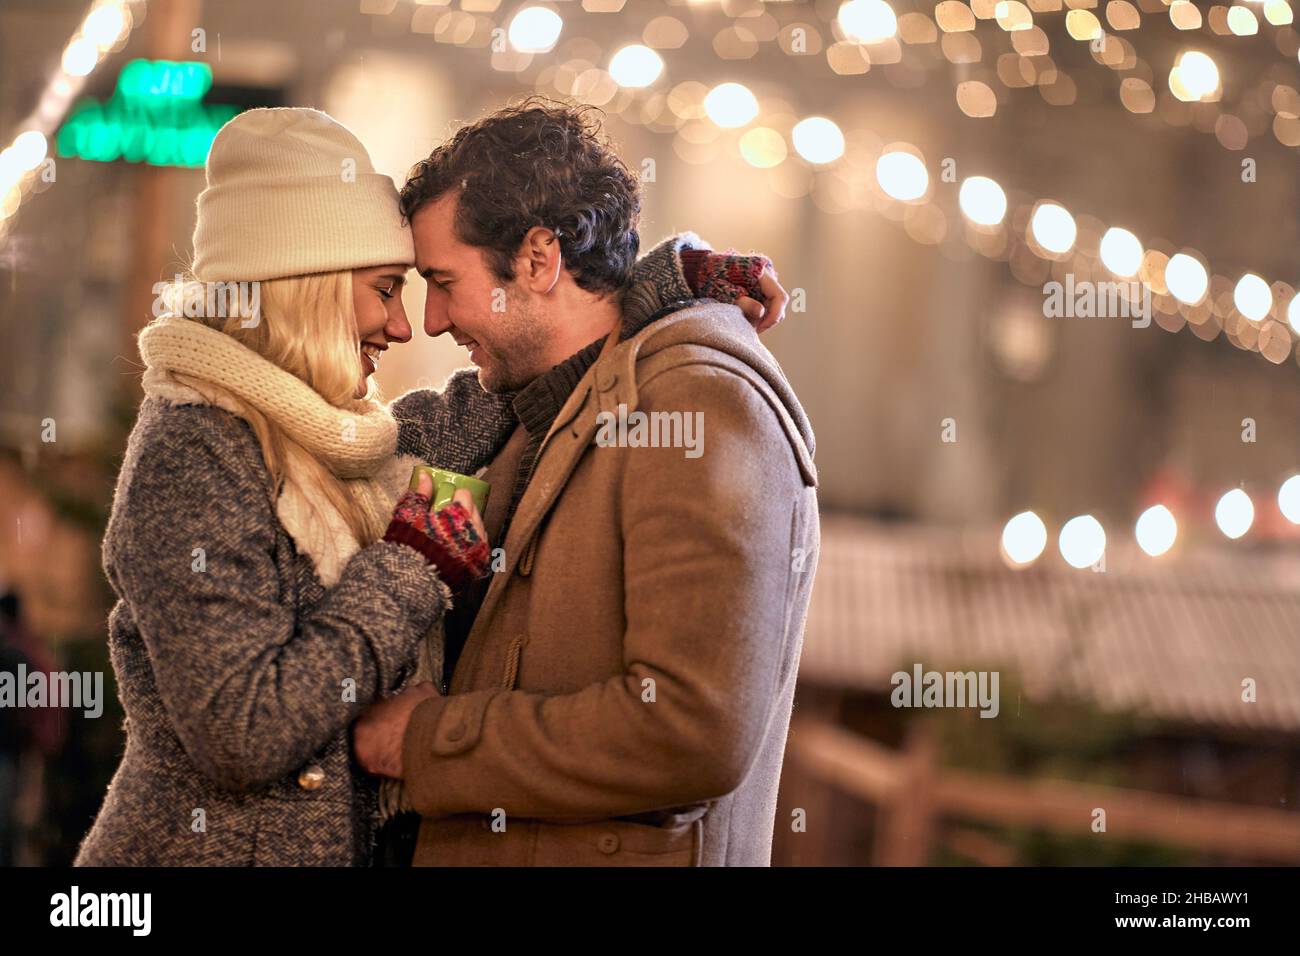 Joyful couple enjoying the winter night together; Festive concept Stock Photo